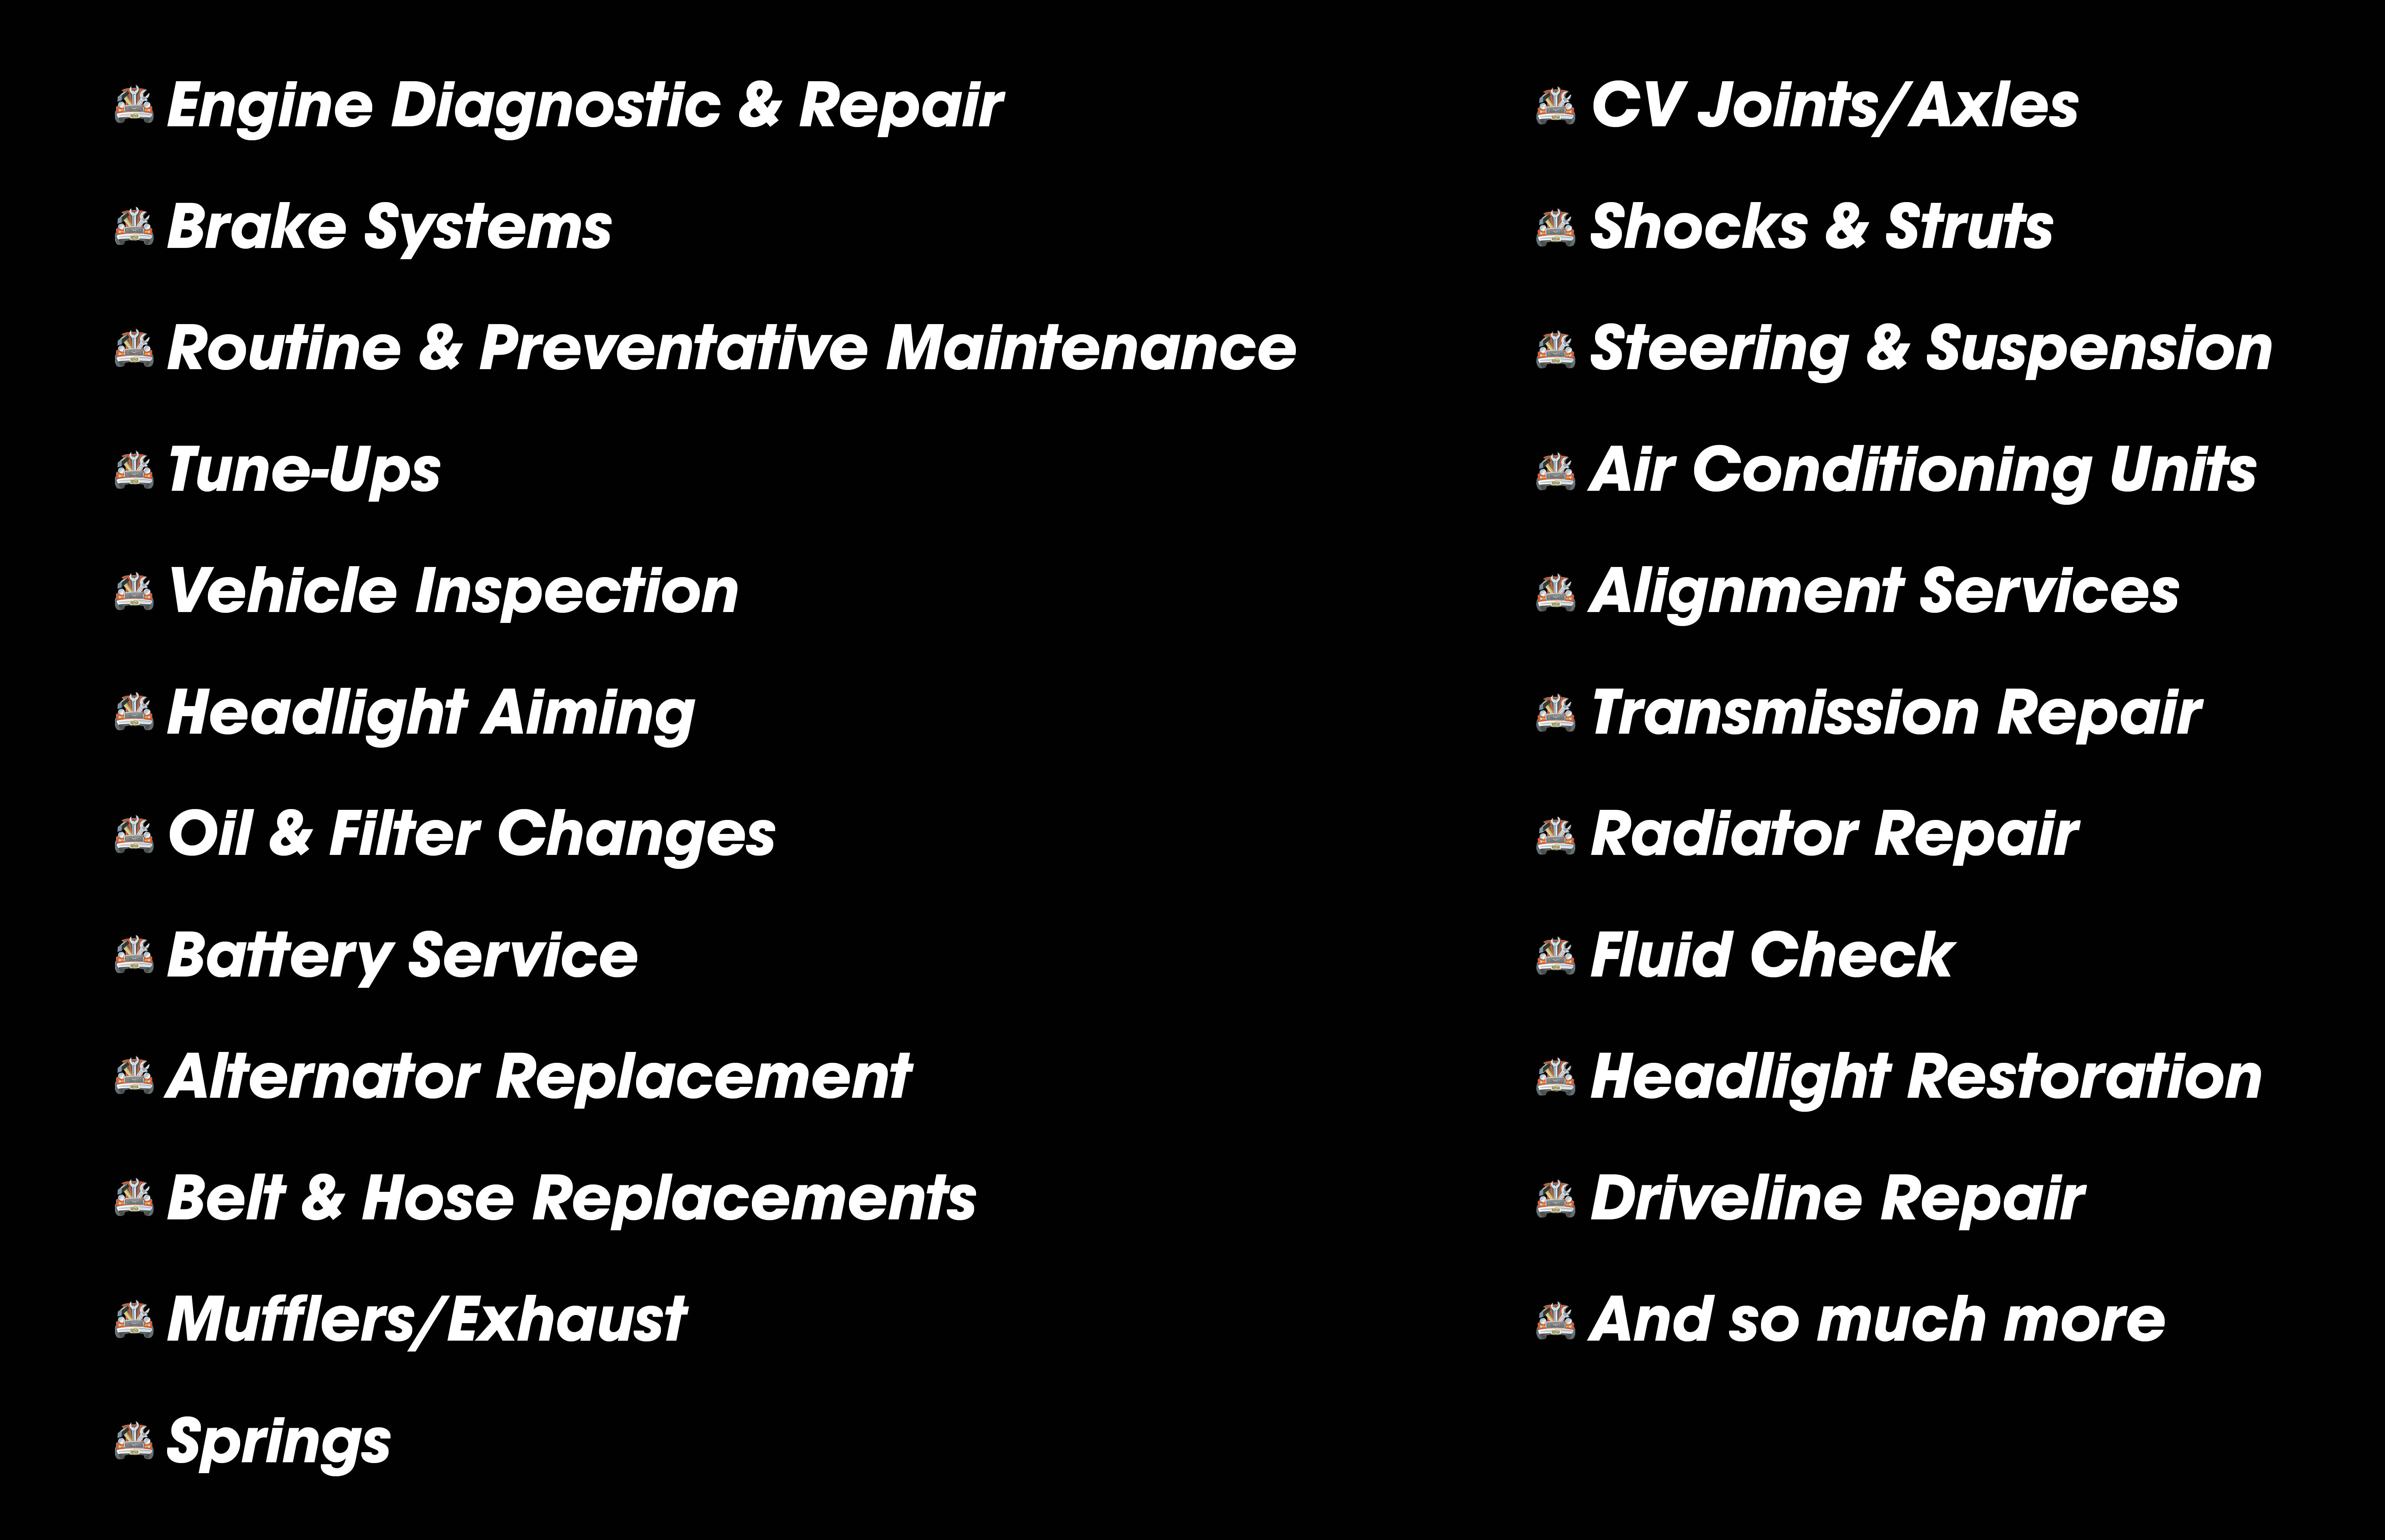 The Collision Repair Shop Michigan 2485454600 Auto Body Repair - Mechanic Shop FernDale Michigan 2